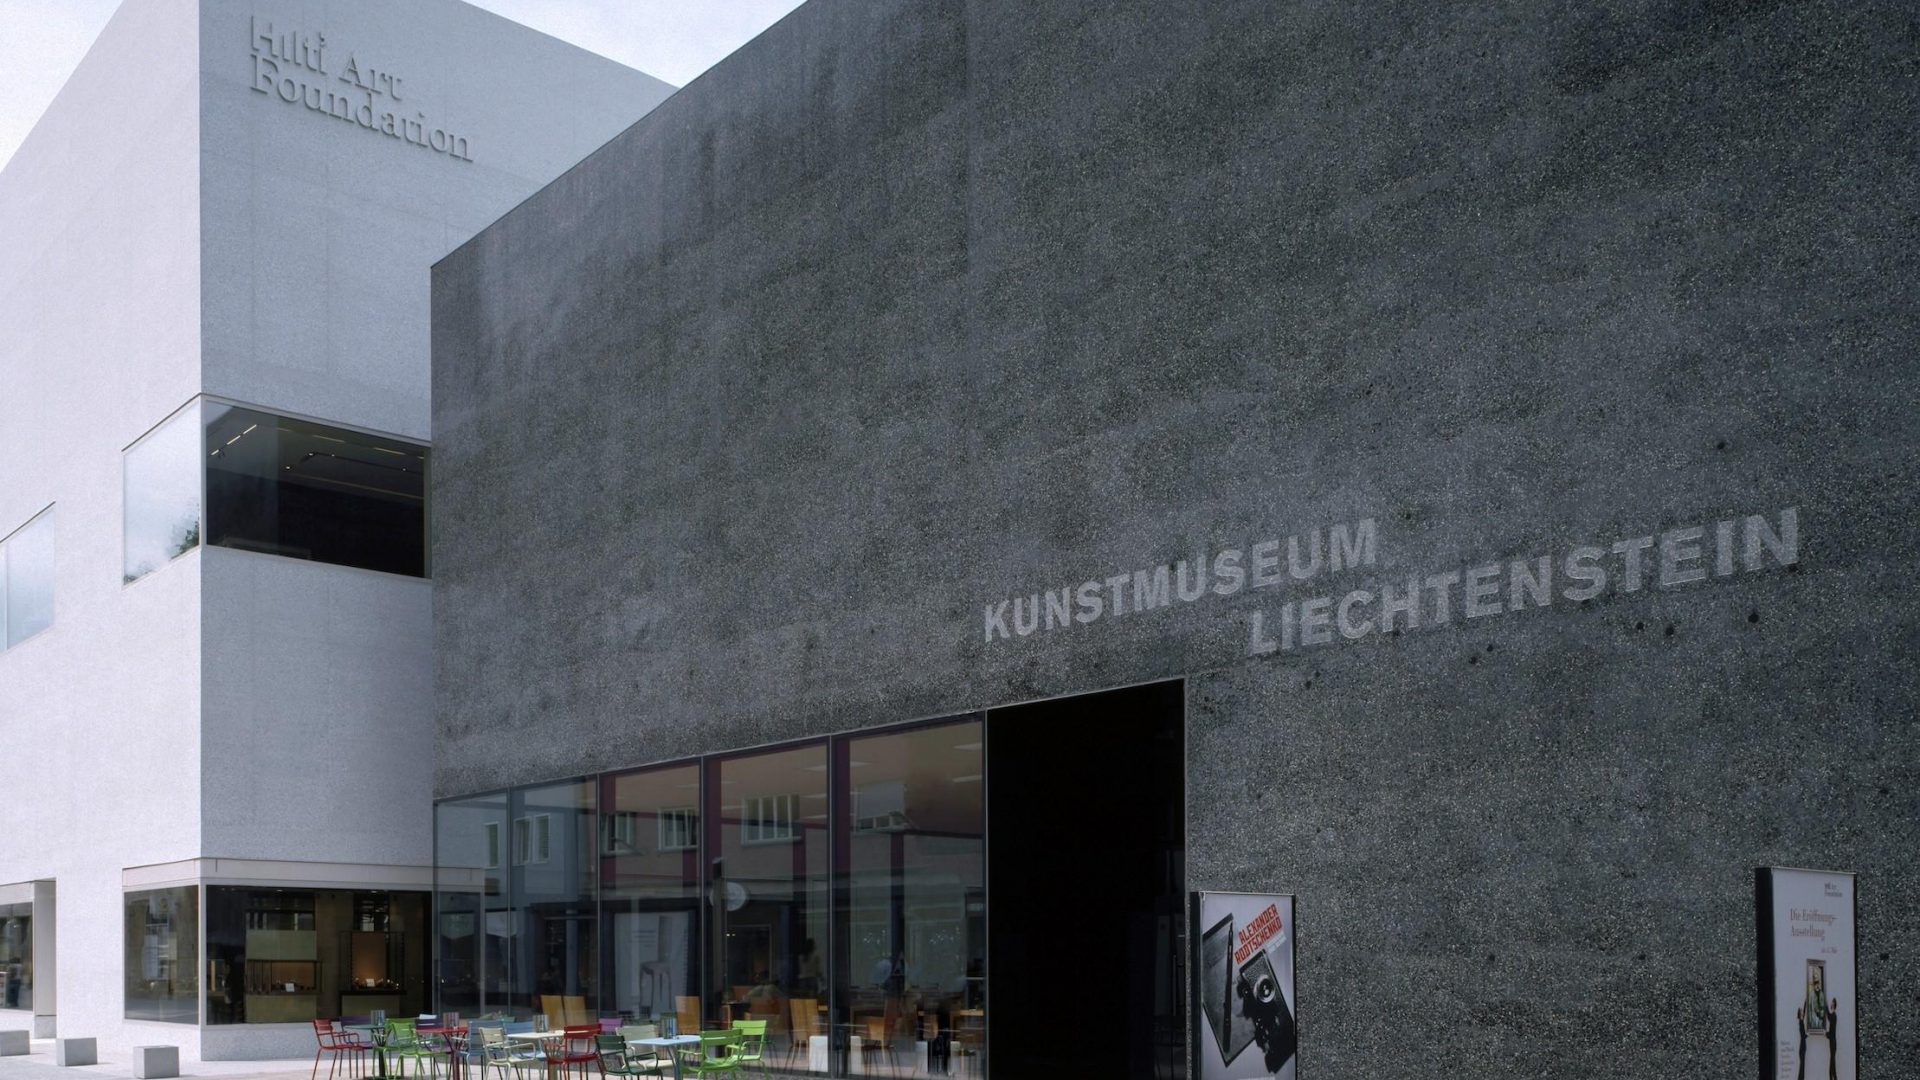 Kunstmuseum Liechtenstein - Hilti Art Foundation